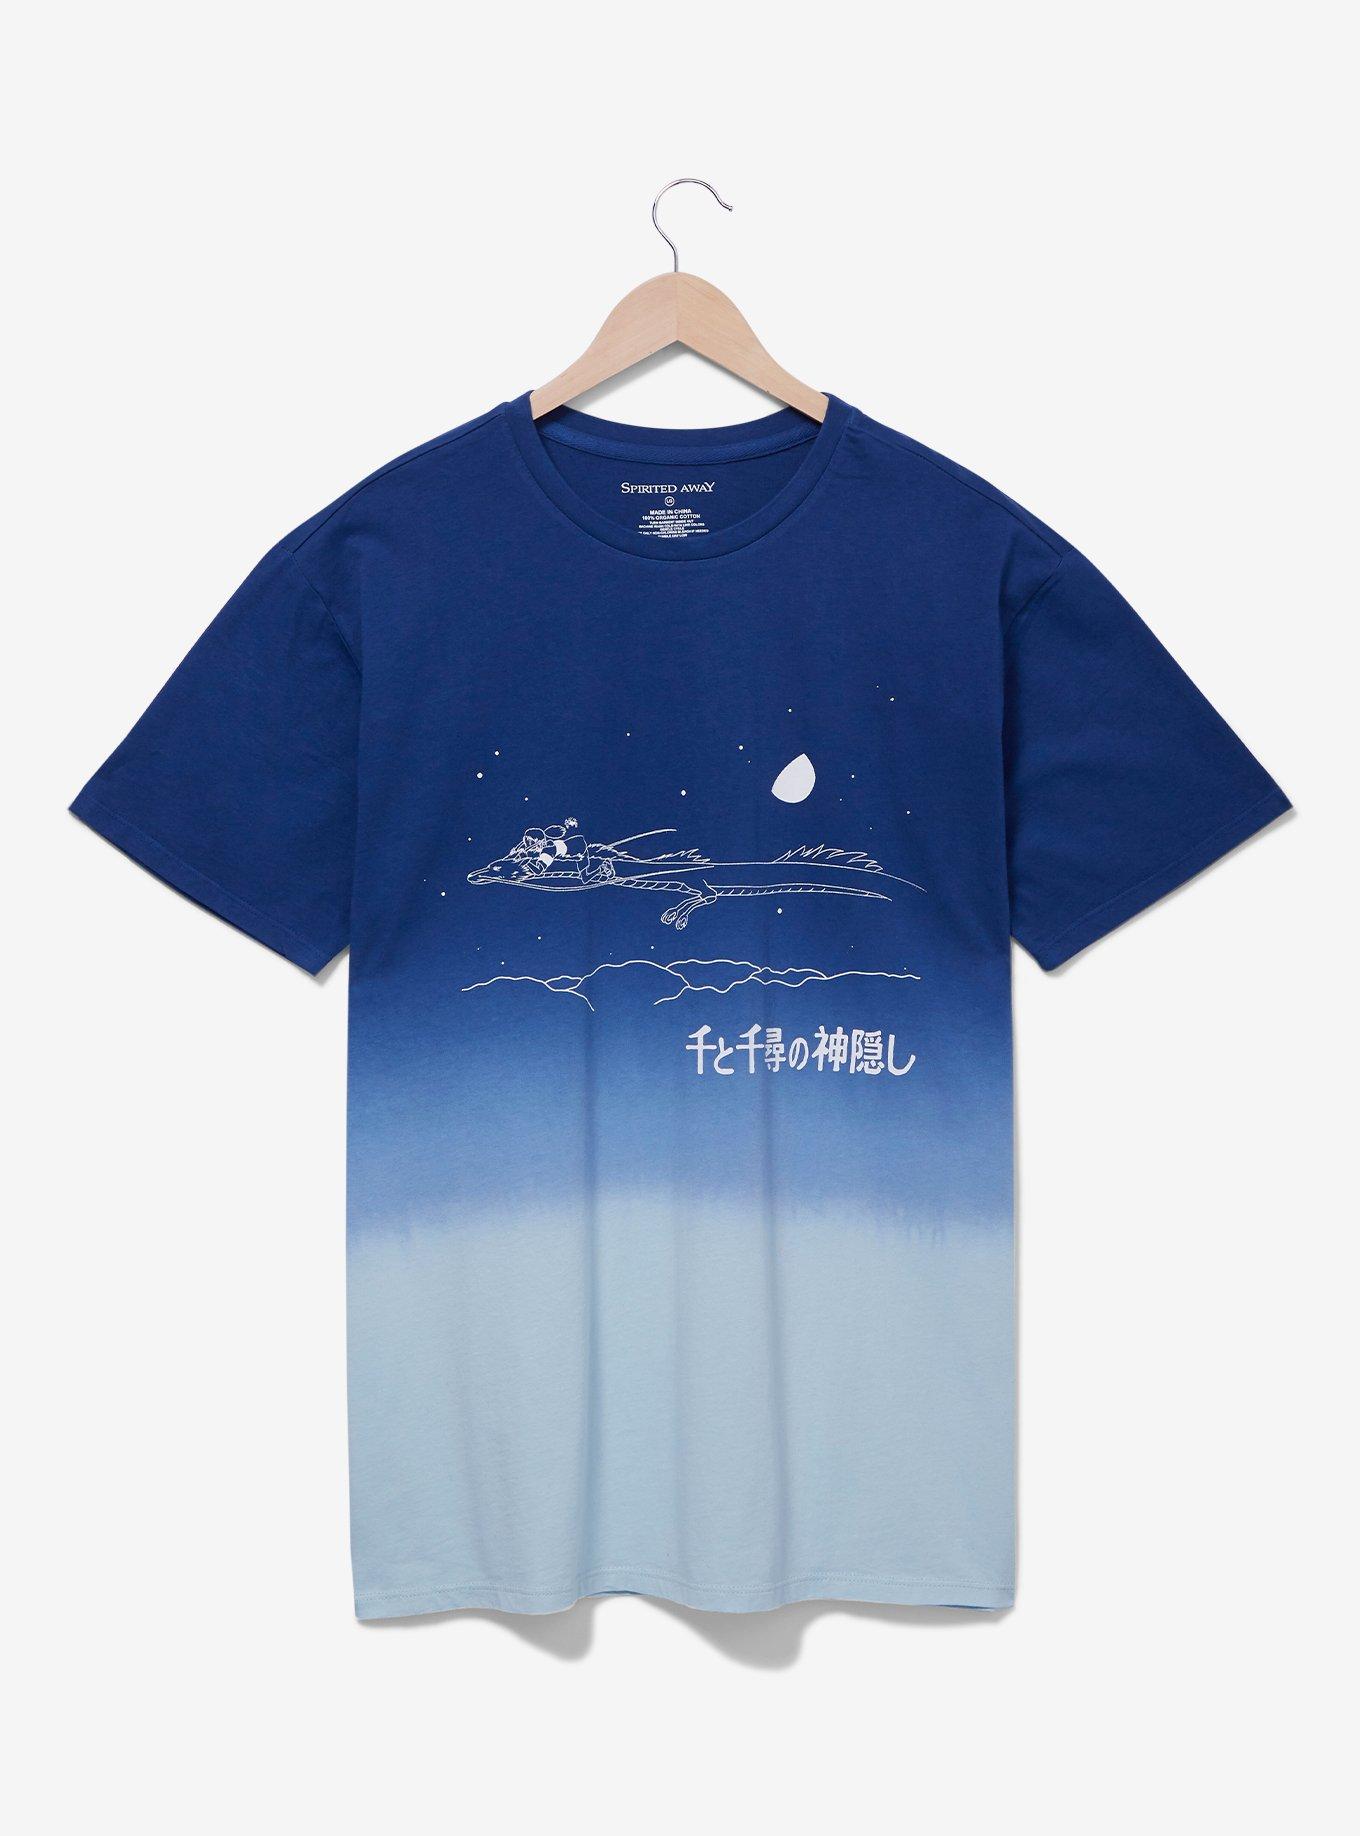 New Spirited Away shirt…I think the design is nice! : r/ghibli